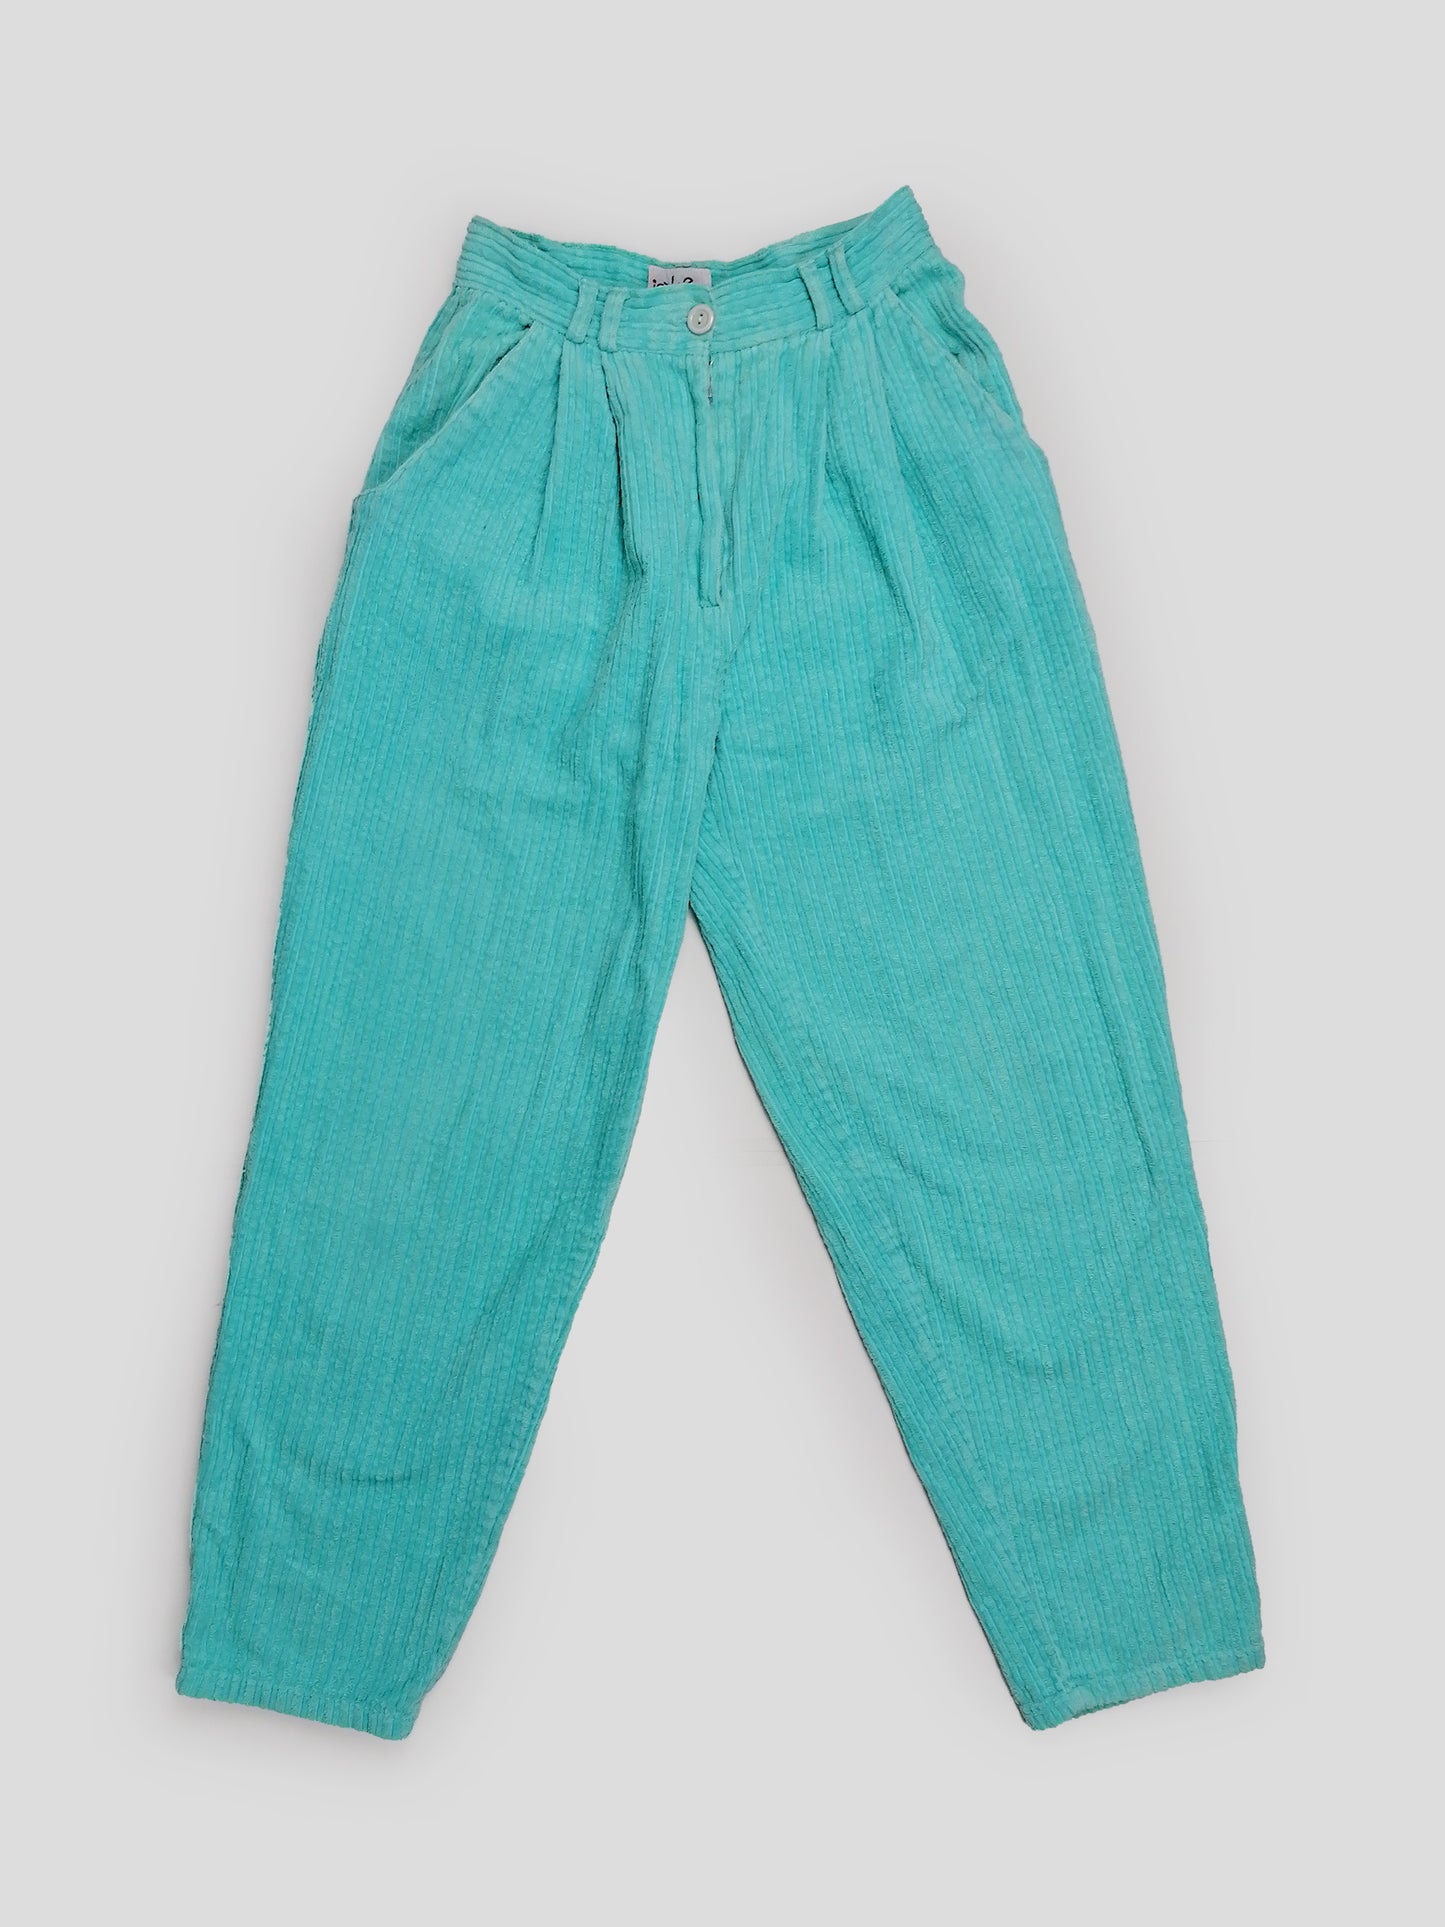 Vintage 80's High Waist Corduroy Velvet Baggy Jeans Aqua Turquoise - size XS-S (25")